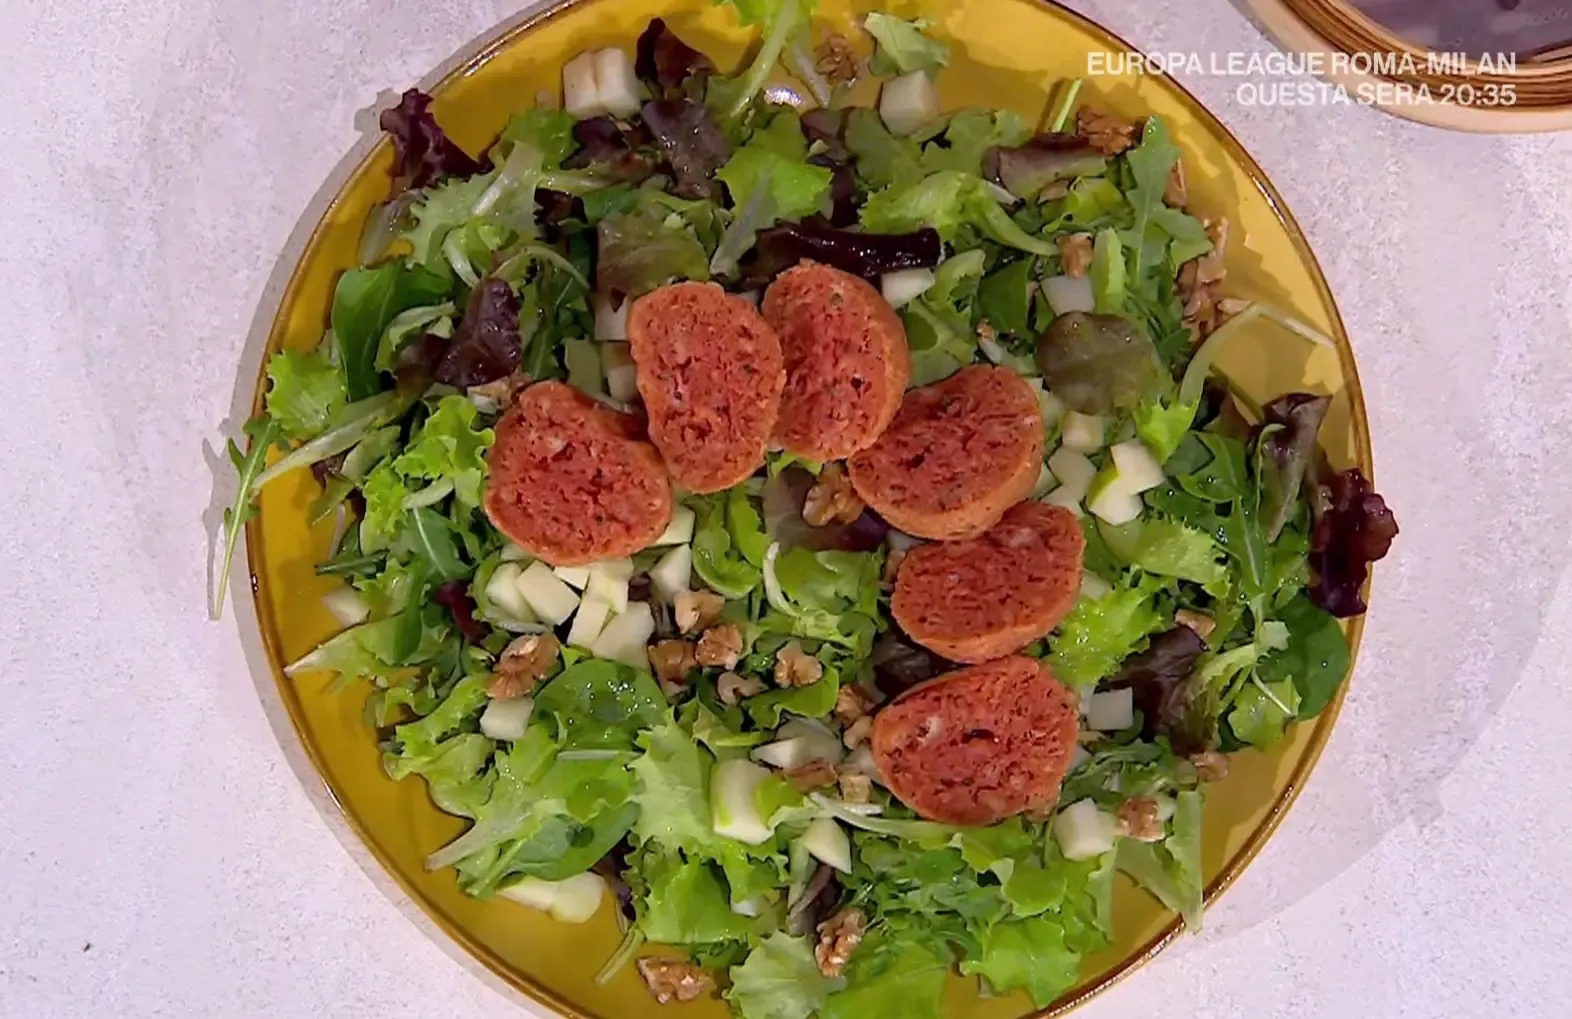 Canederli di rapa rossa in insalata di Barbara De Nigris